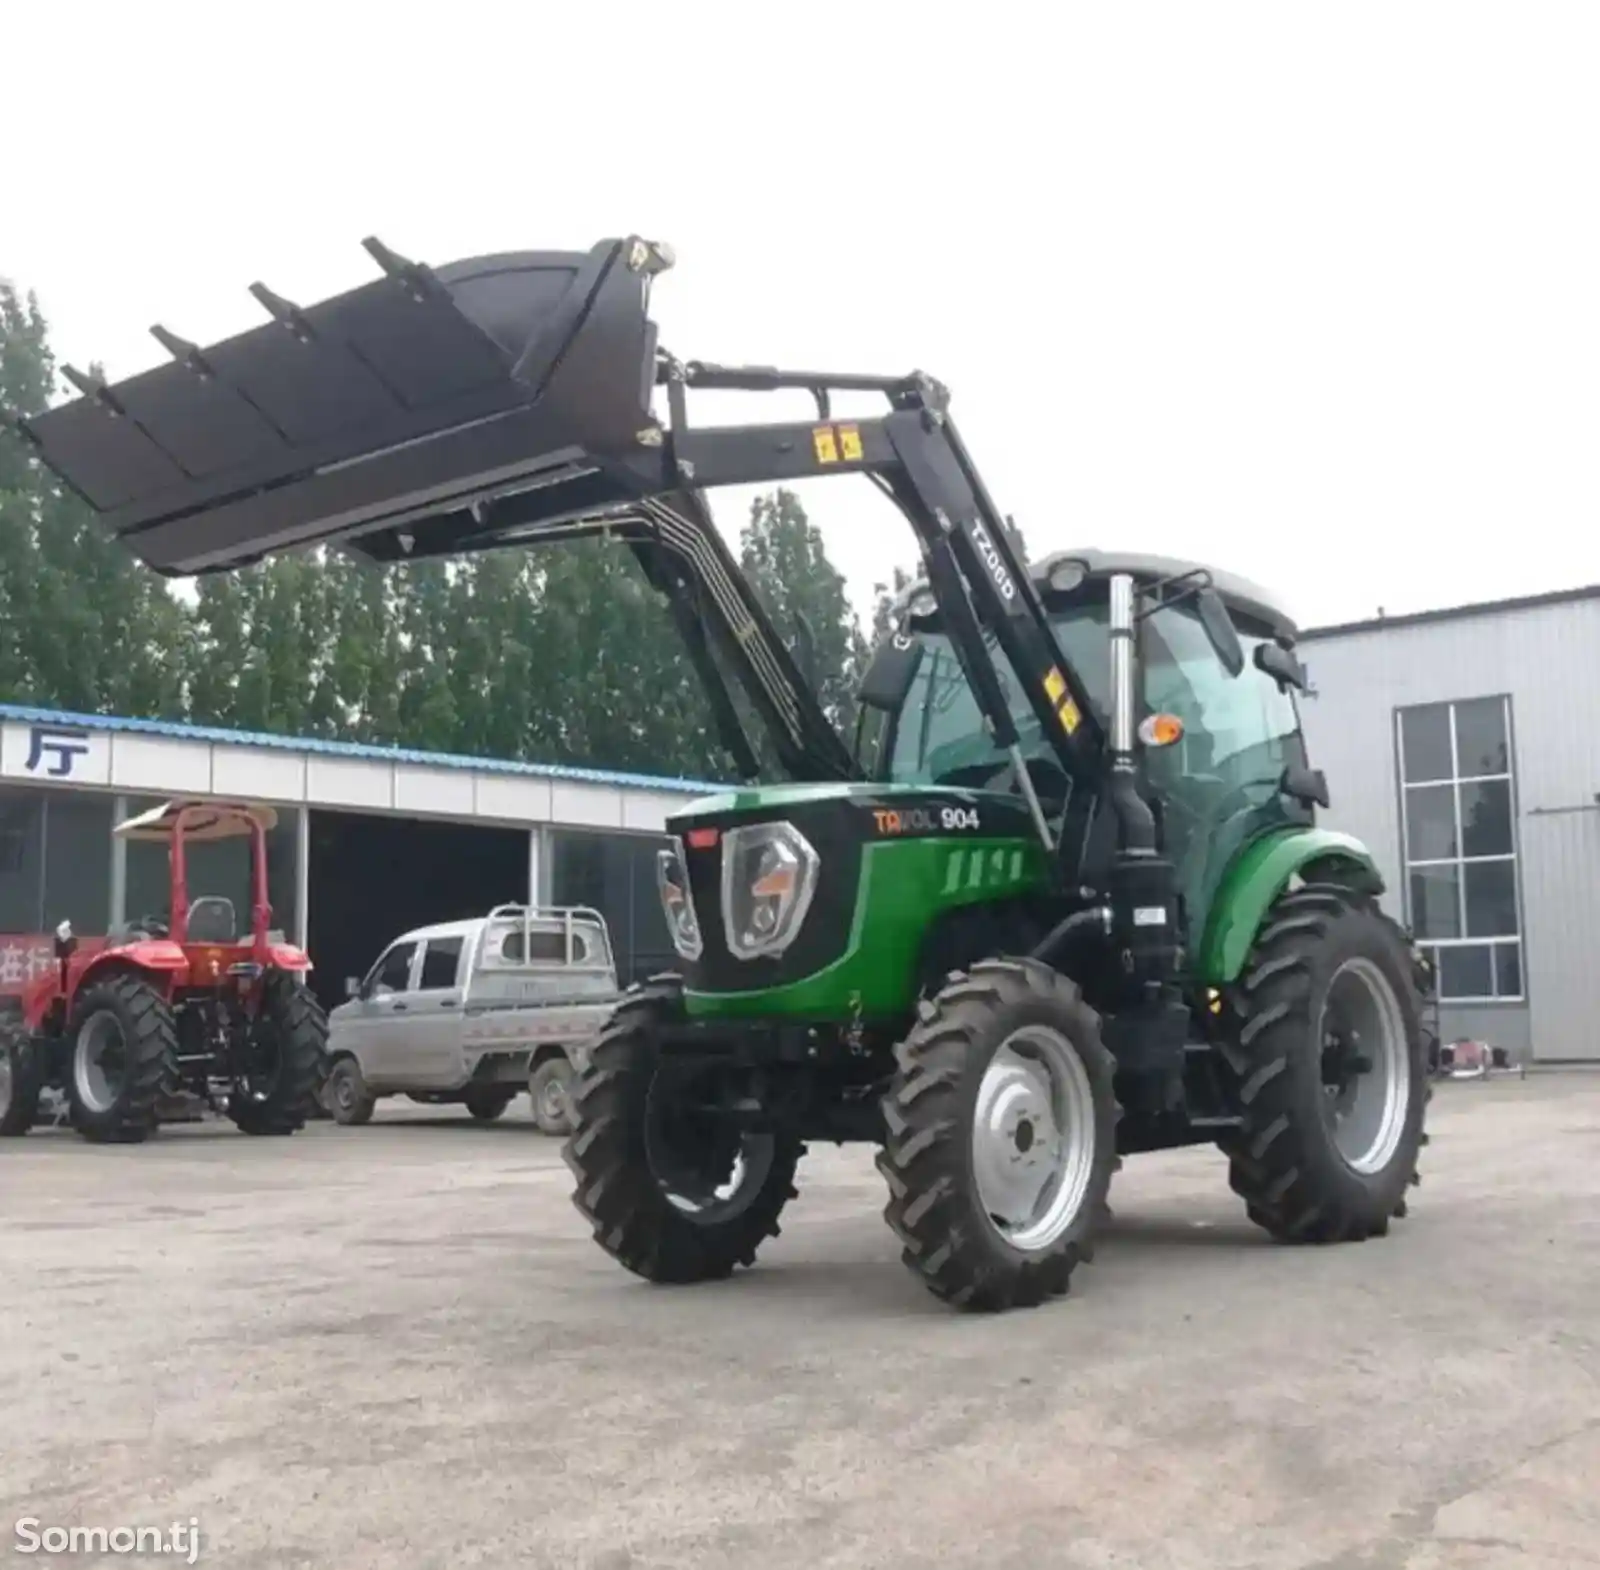 Трактор-погрузчик Tavol 904 на заказ-7